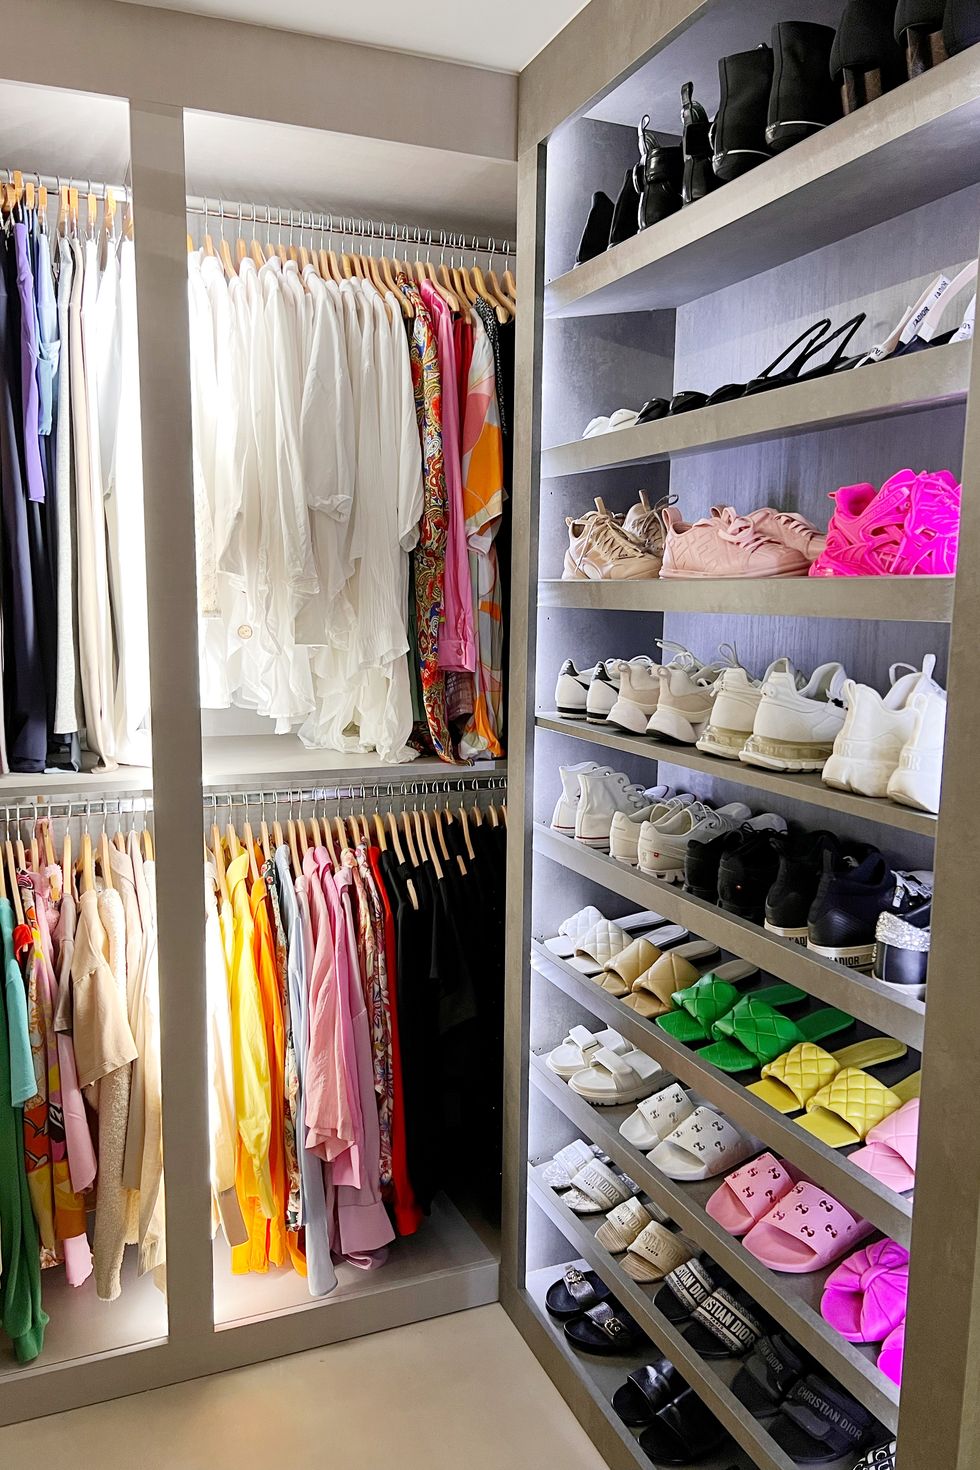 Organizing a colorful closet